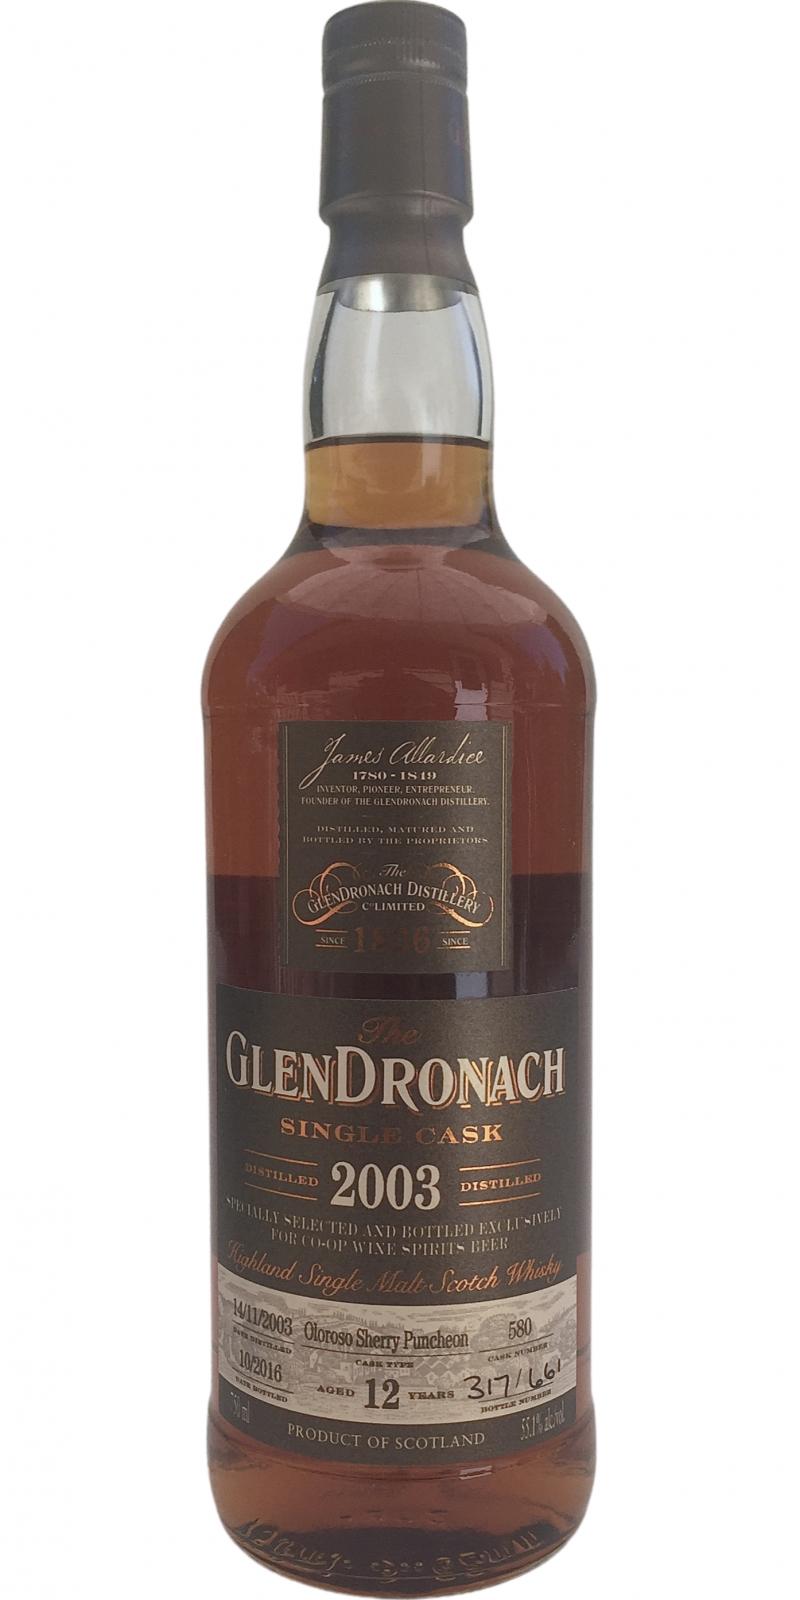 Glendronach 2003 Single Cask Oloroso Sherry Puncheon #580 CO-OP Wine Spirits Beer 55.1% 750ml